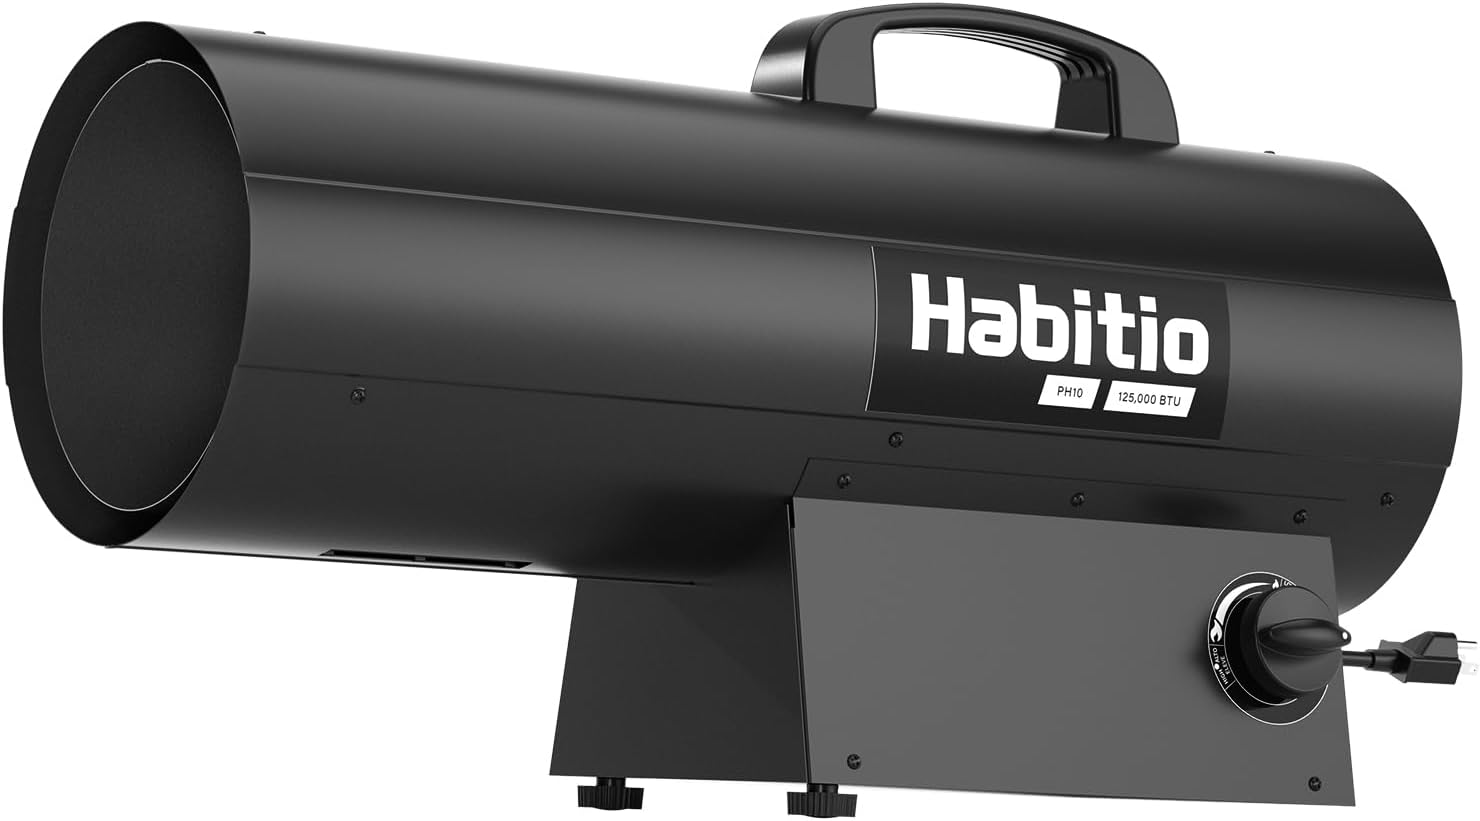 Habitio 125,000 BTU Forced Air Propane Heater Review